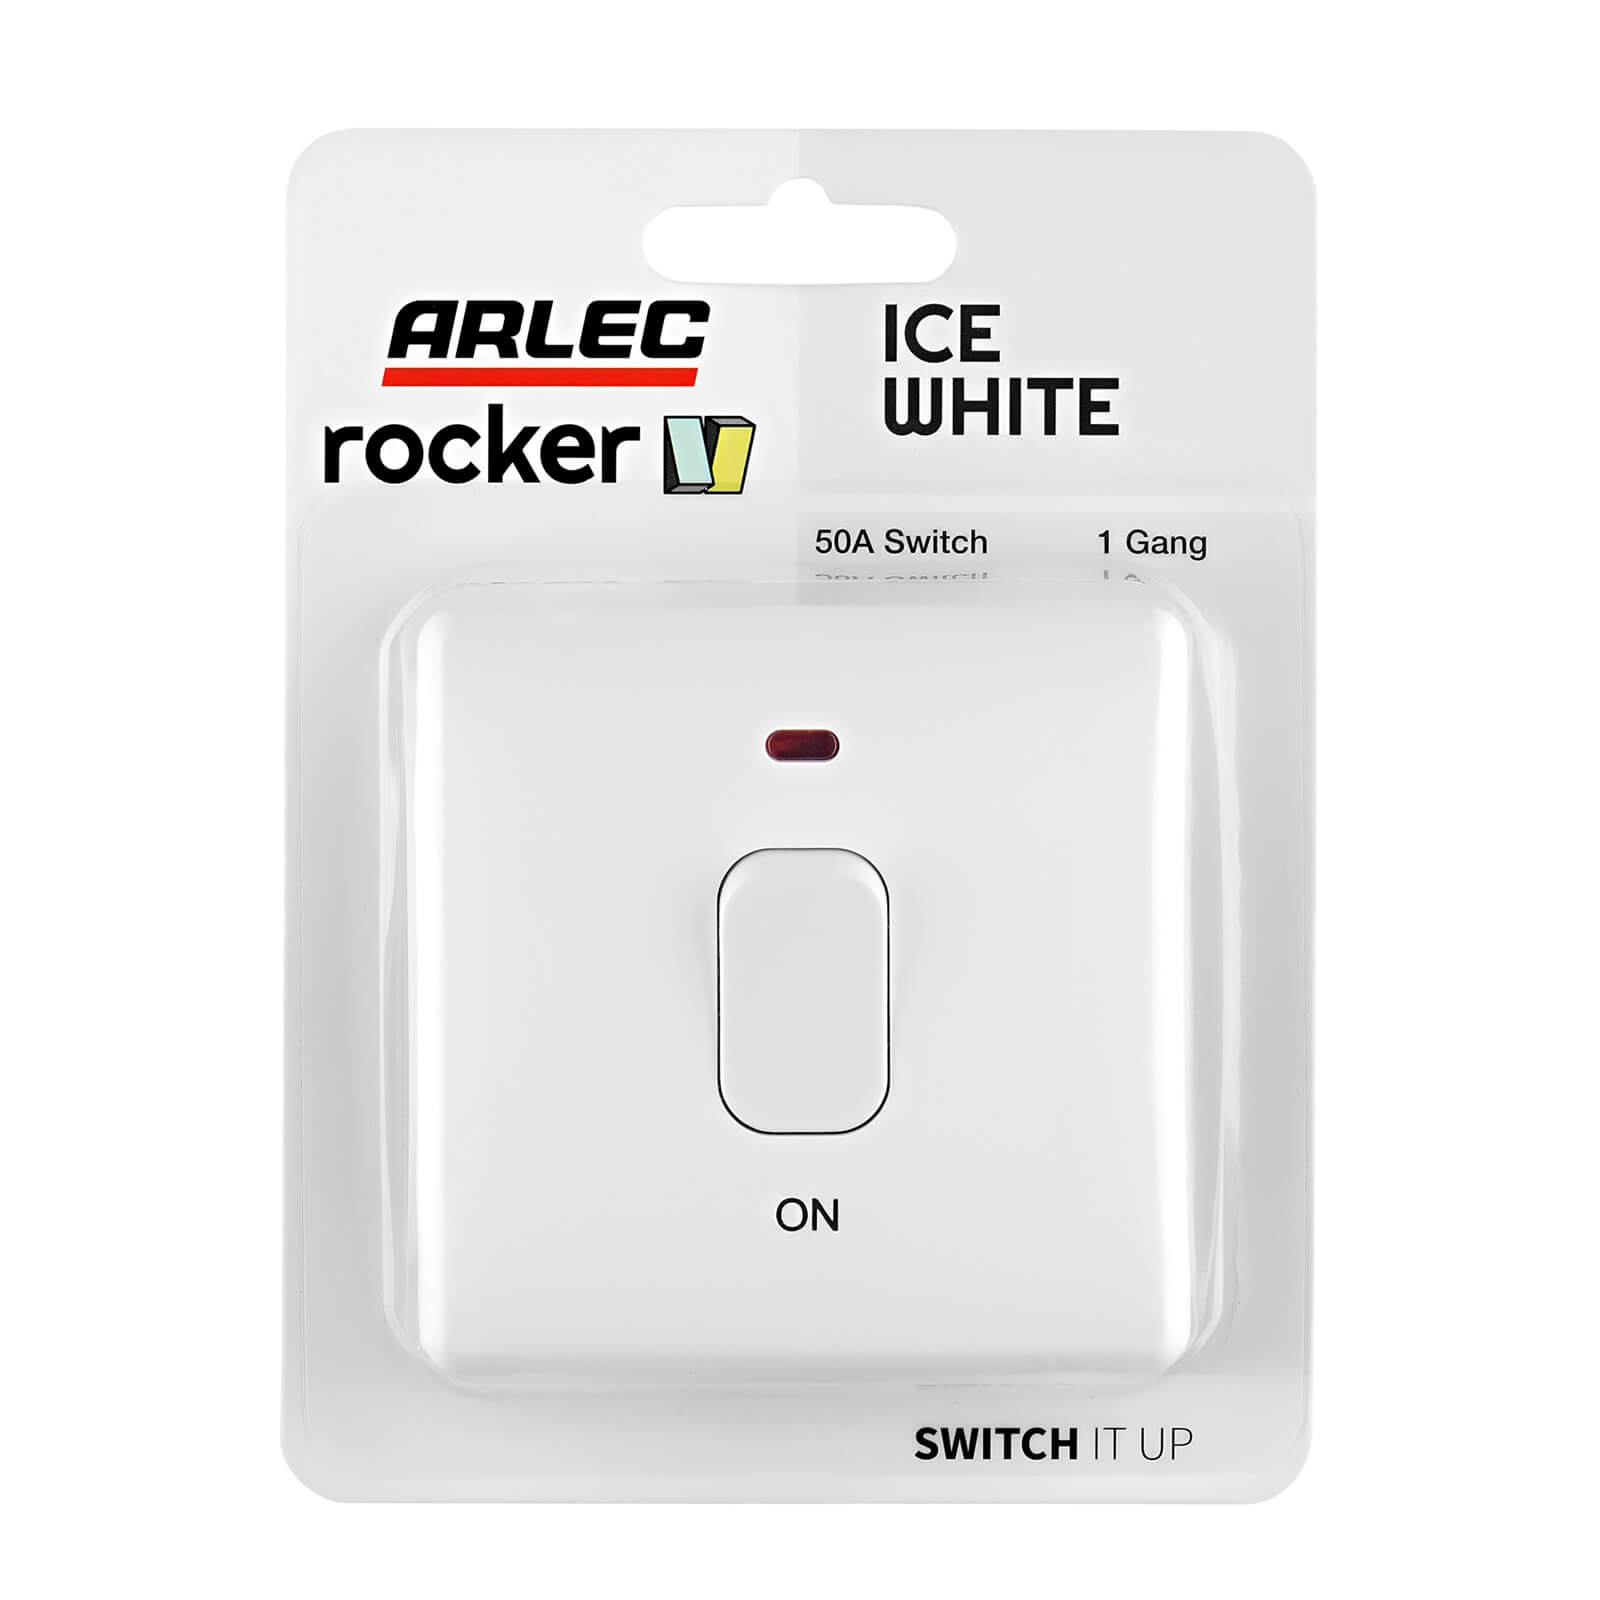 Arlec Rocker 50A 1Gang Double pole Ice White Single switch